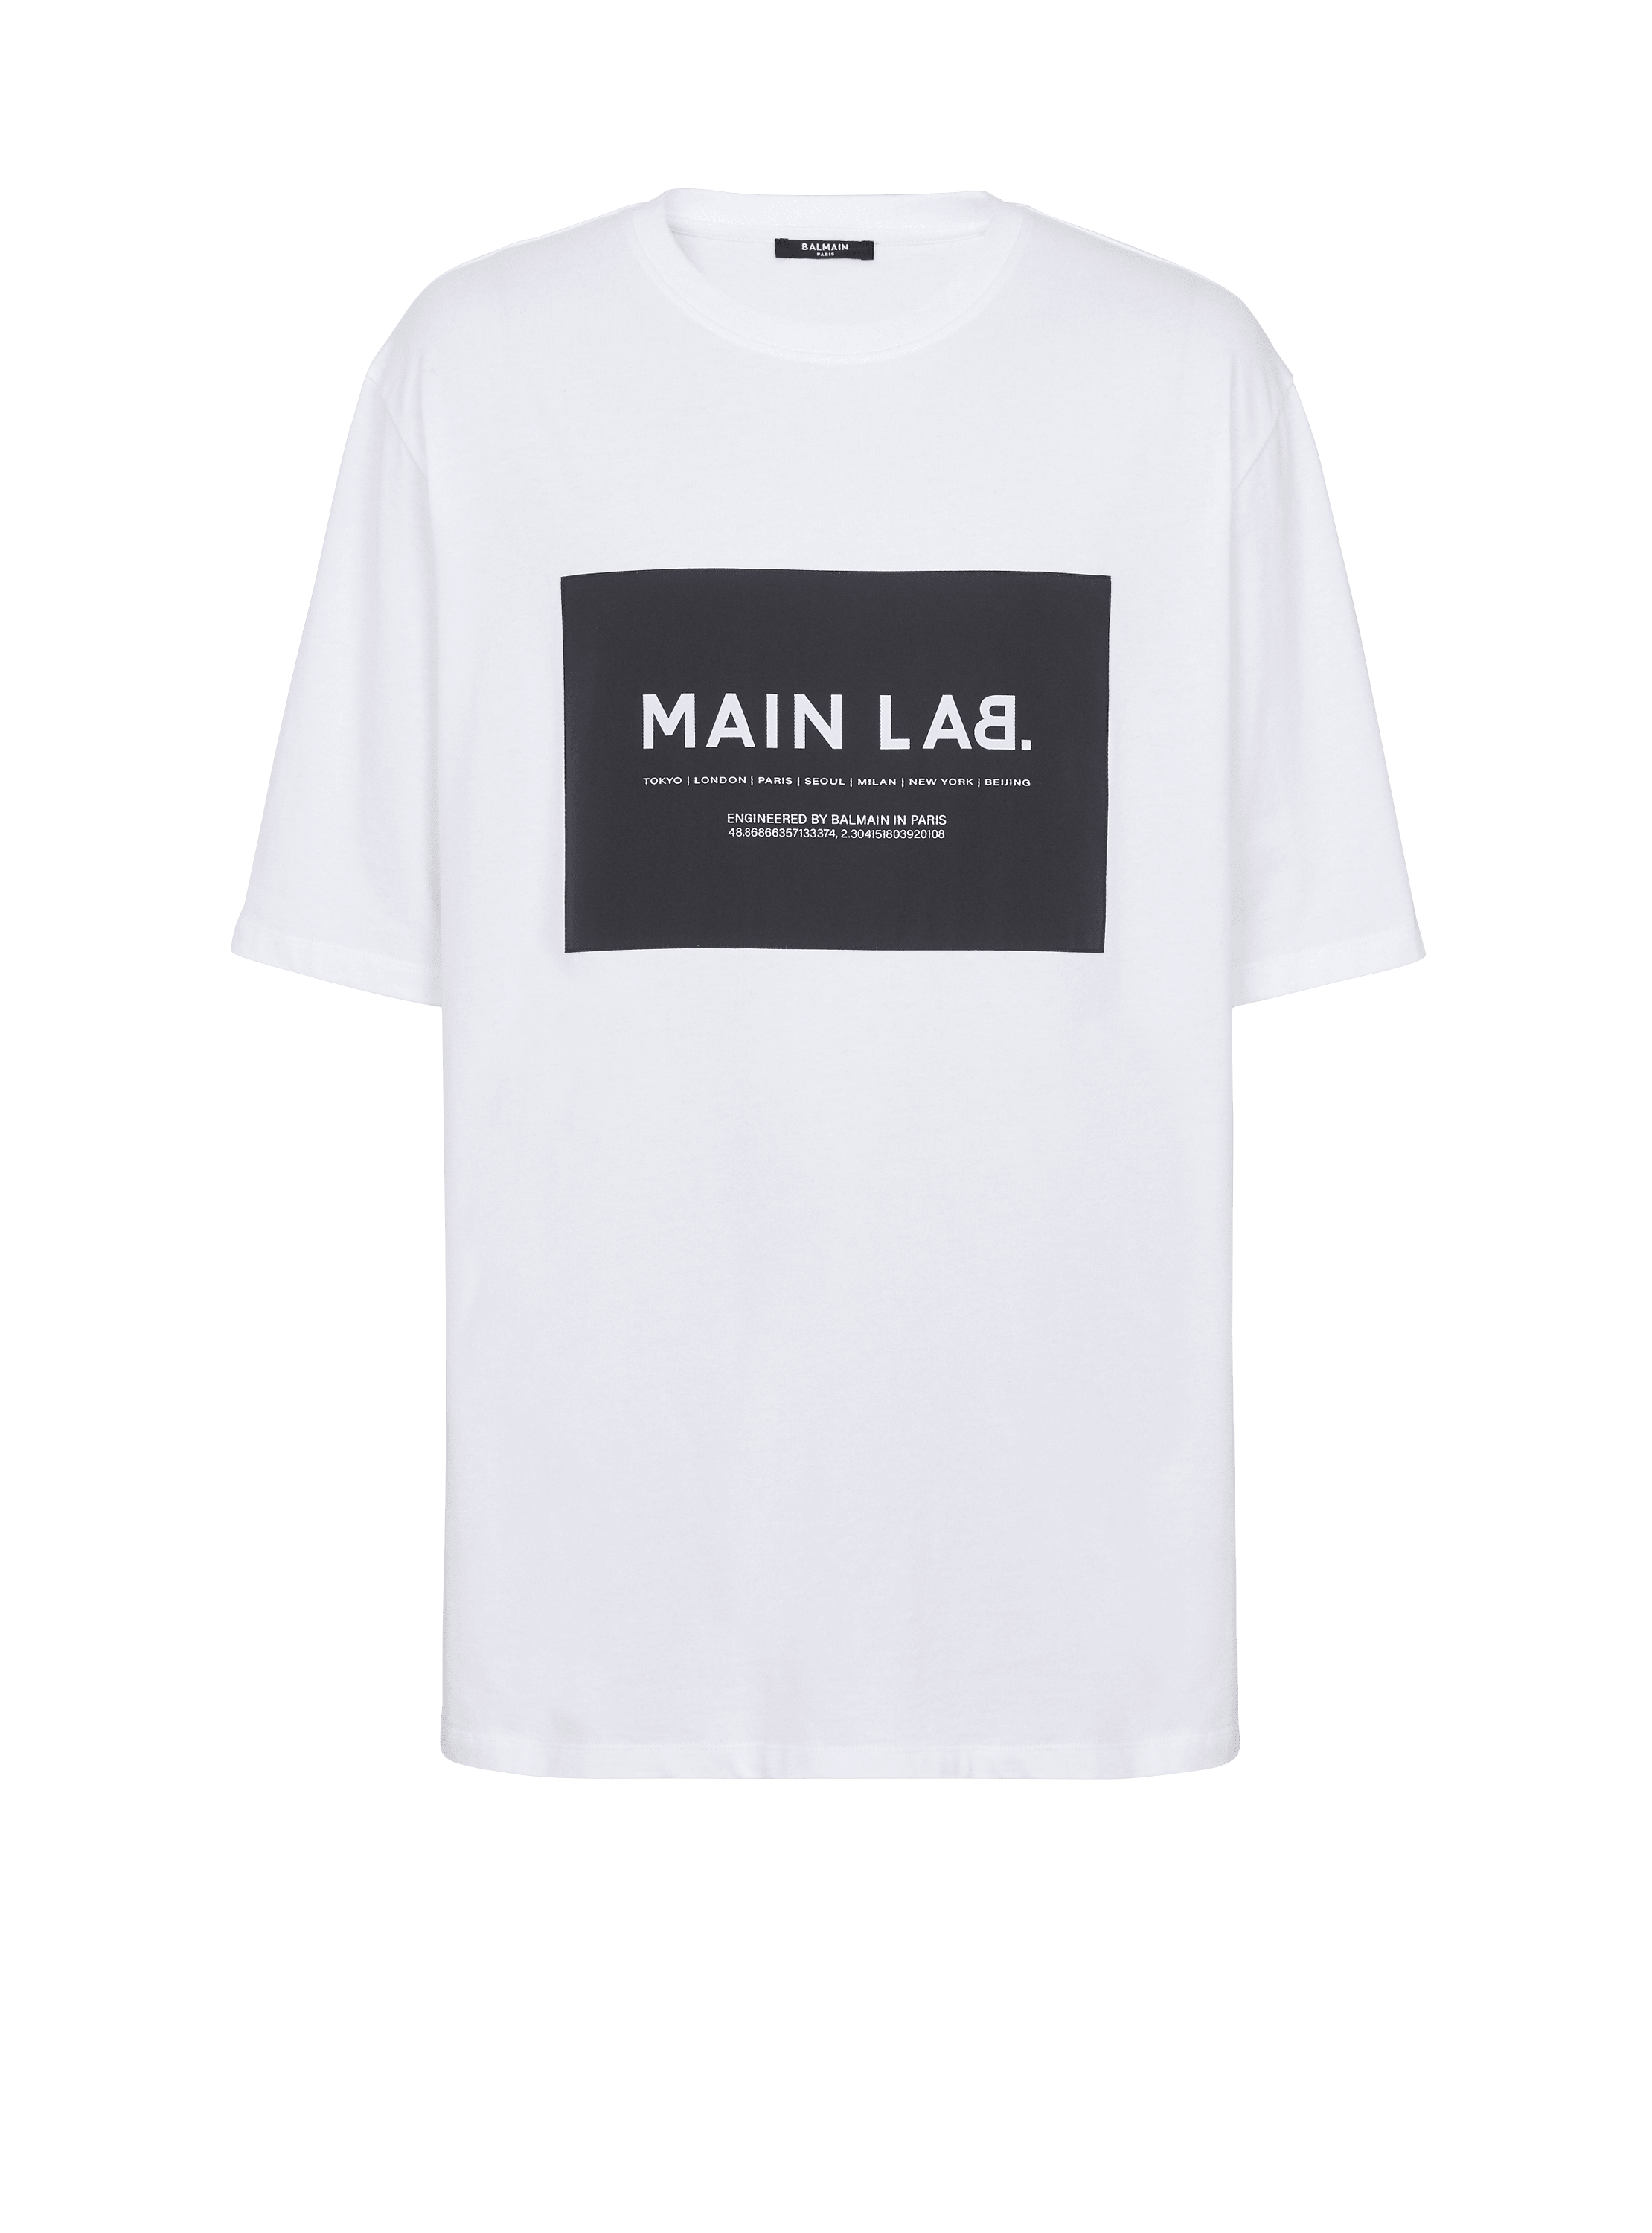 Main Lab. 라벨 티셔츠